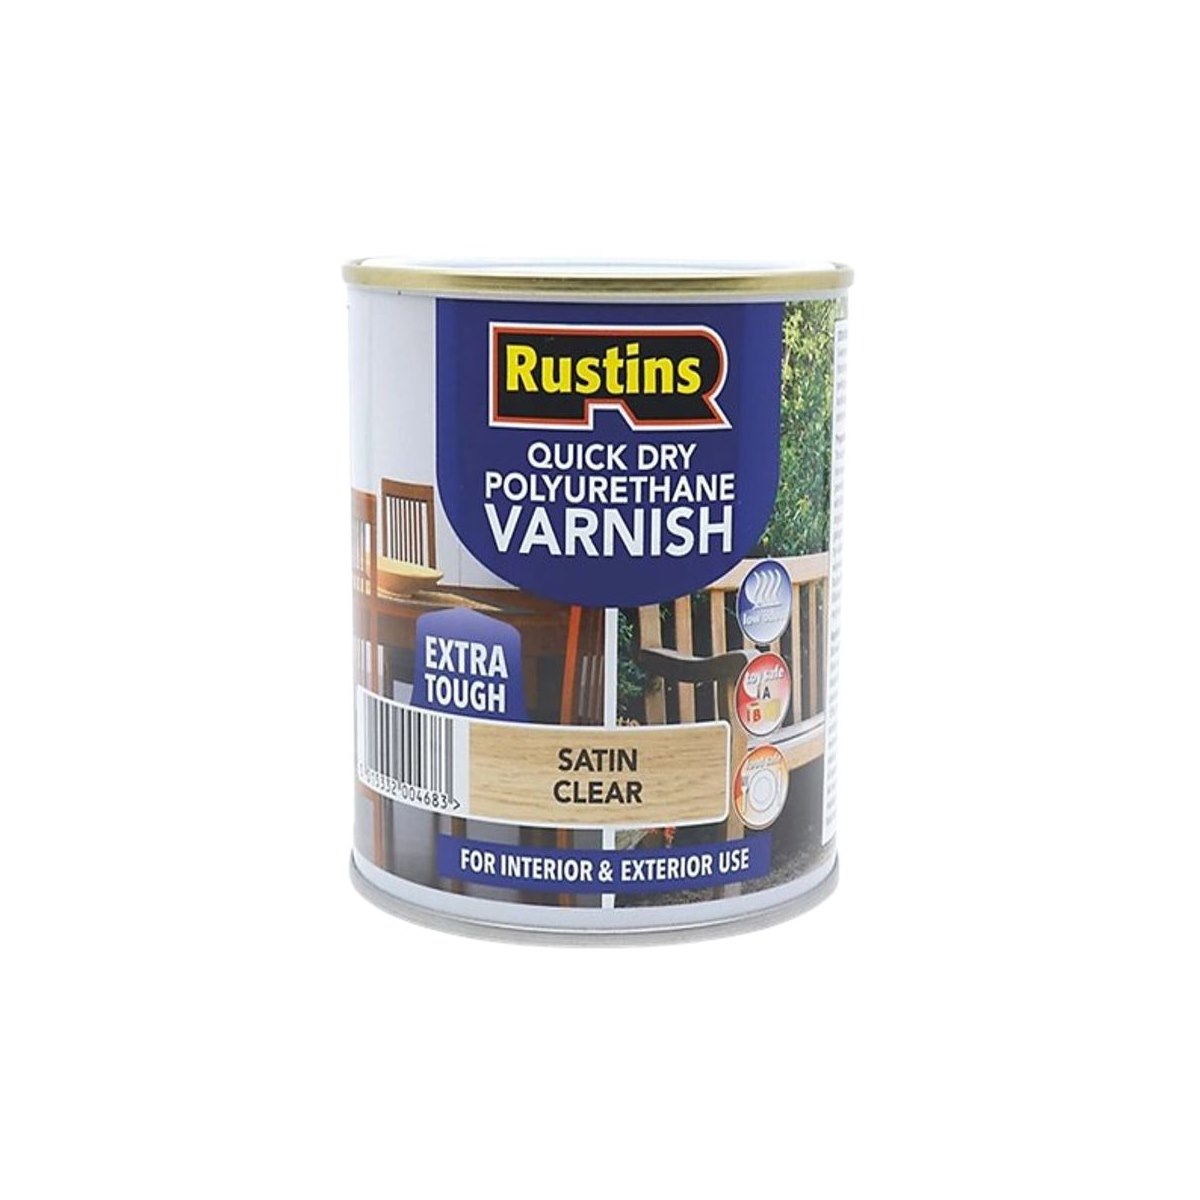 Satin Clear Rustin Quick Dry Polyurethane Extra Tough Varnish 5L